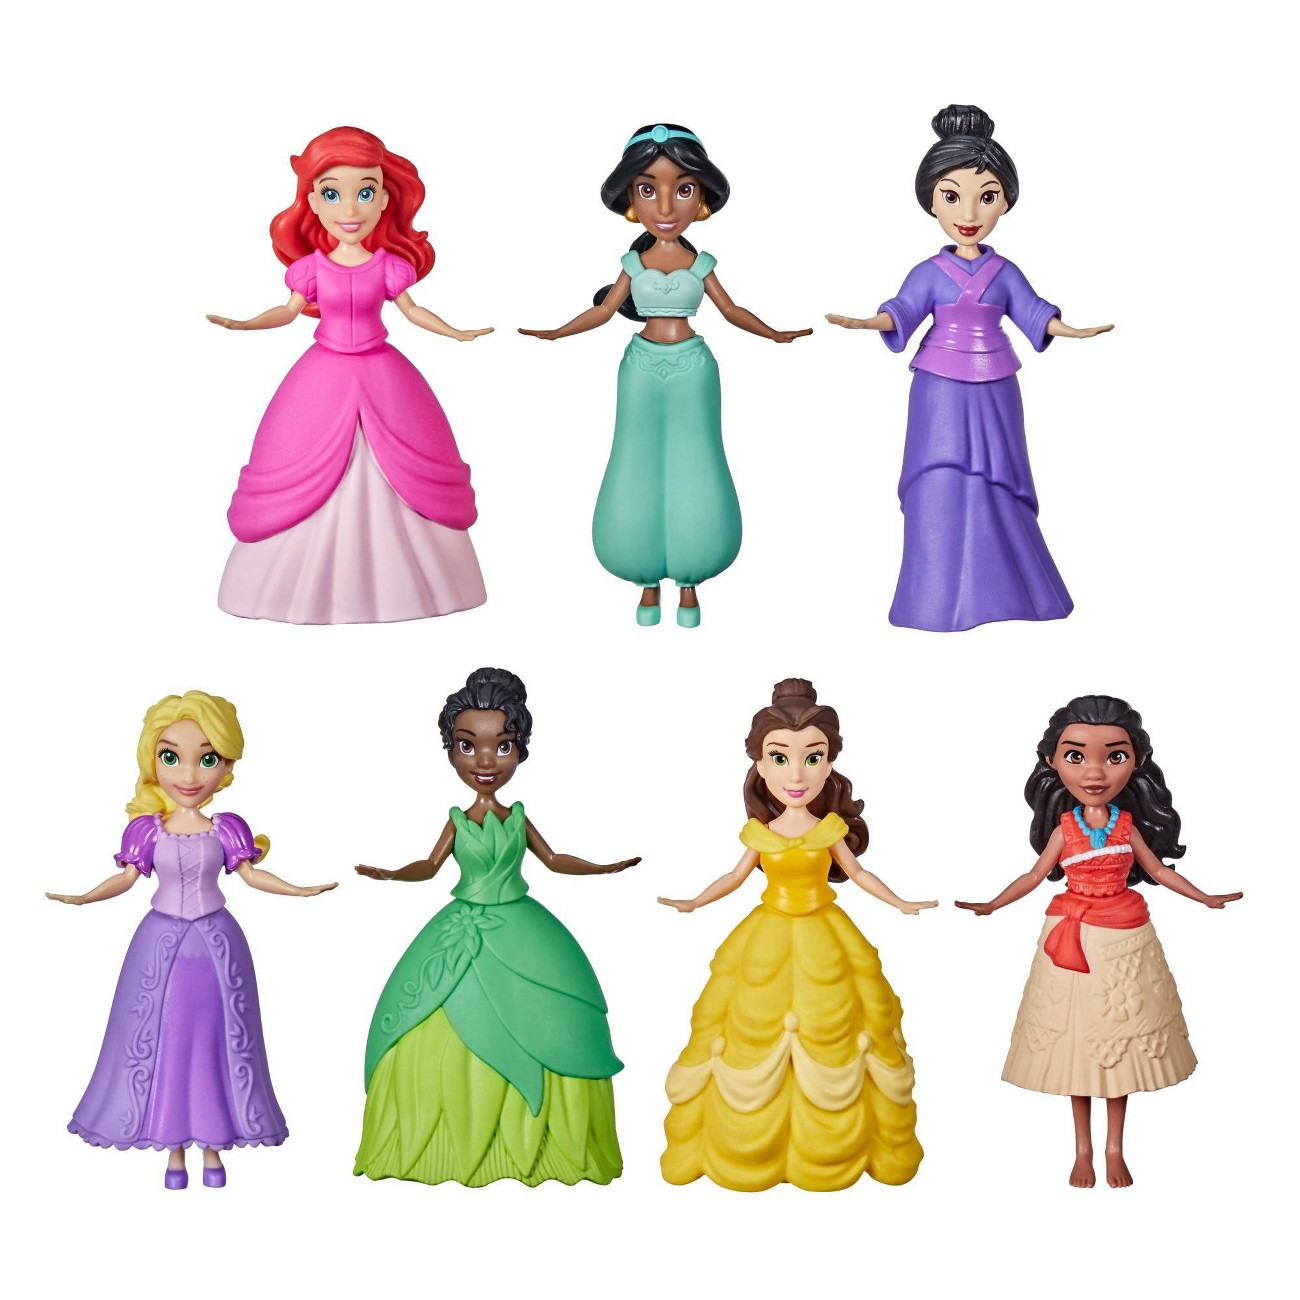 Disney Princess Secret Styles Palace Fashion Collection (Target Exclusive)